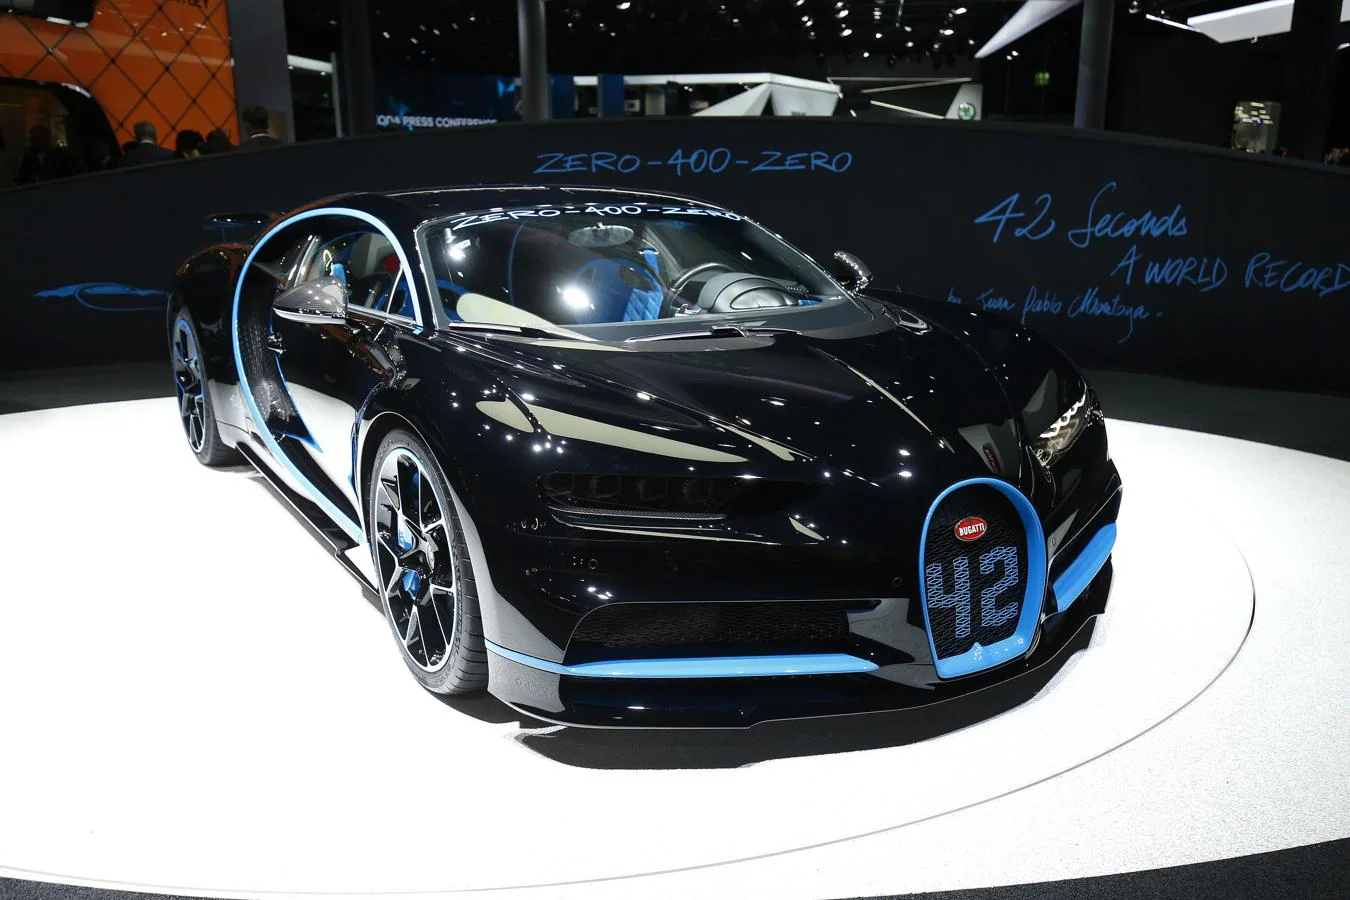 20. Bugatti Zero-400-Zero, capaz de alcanzar los 400 por hora en 42 segundos